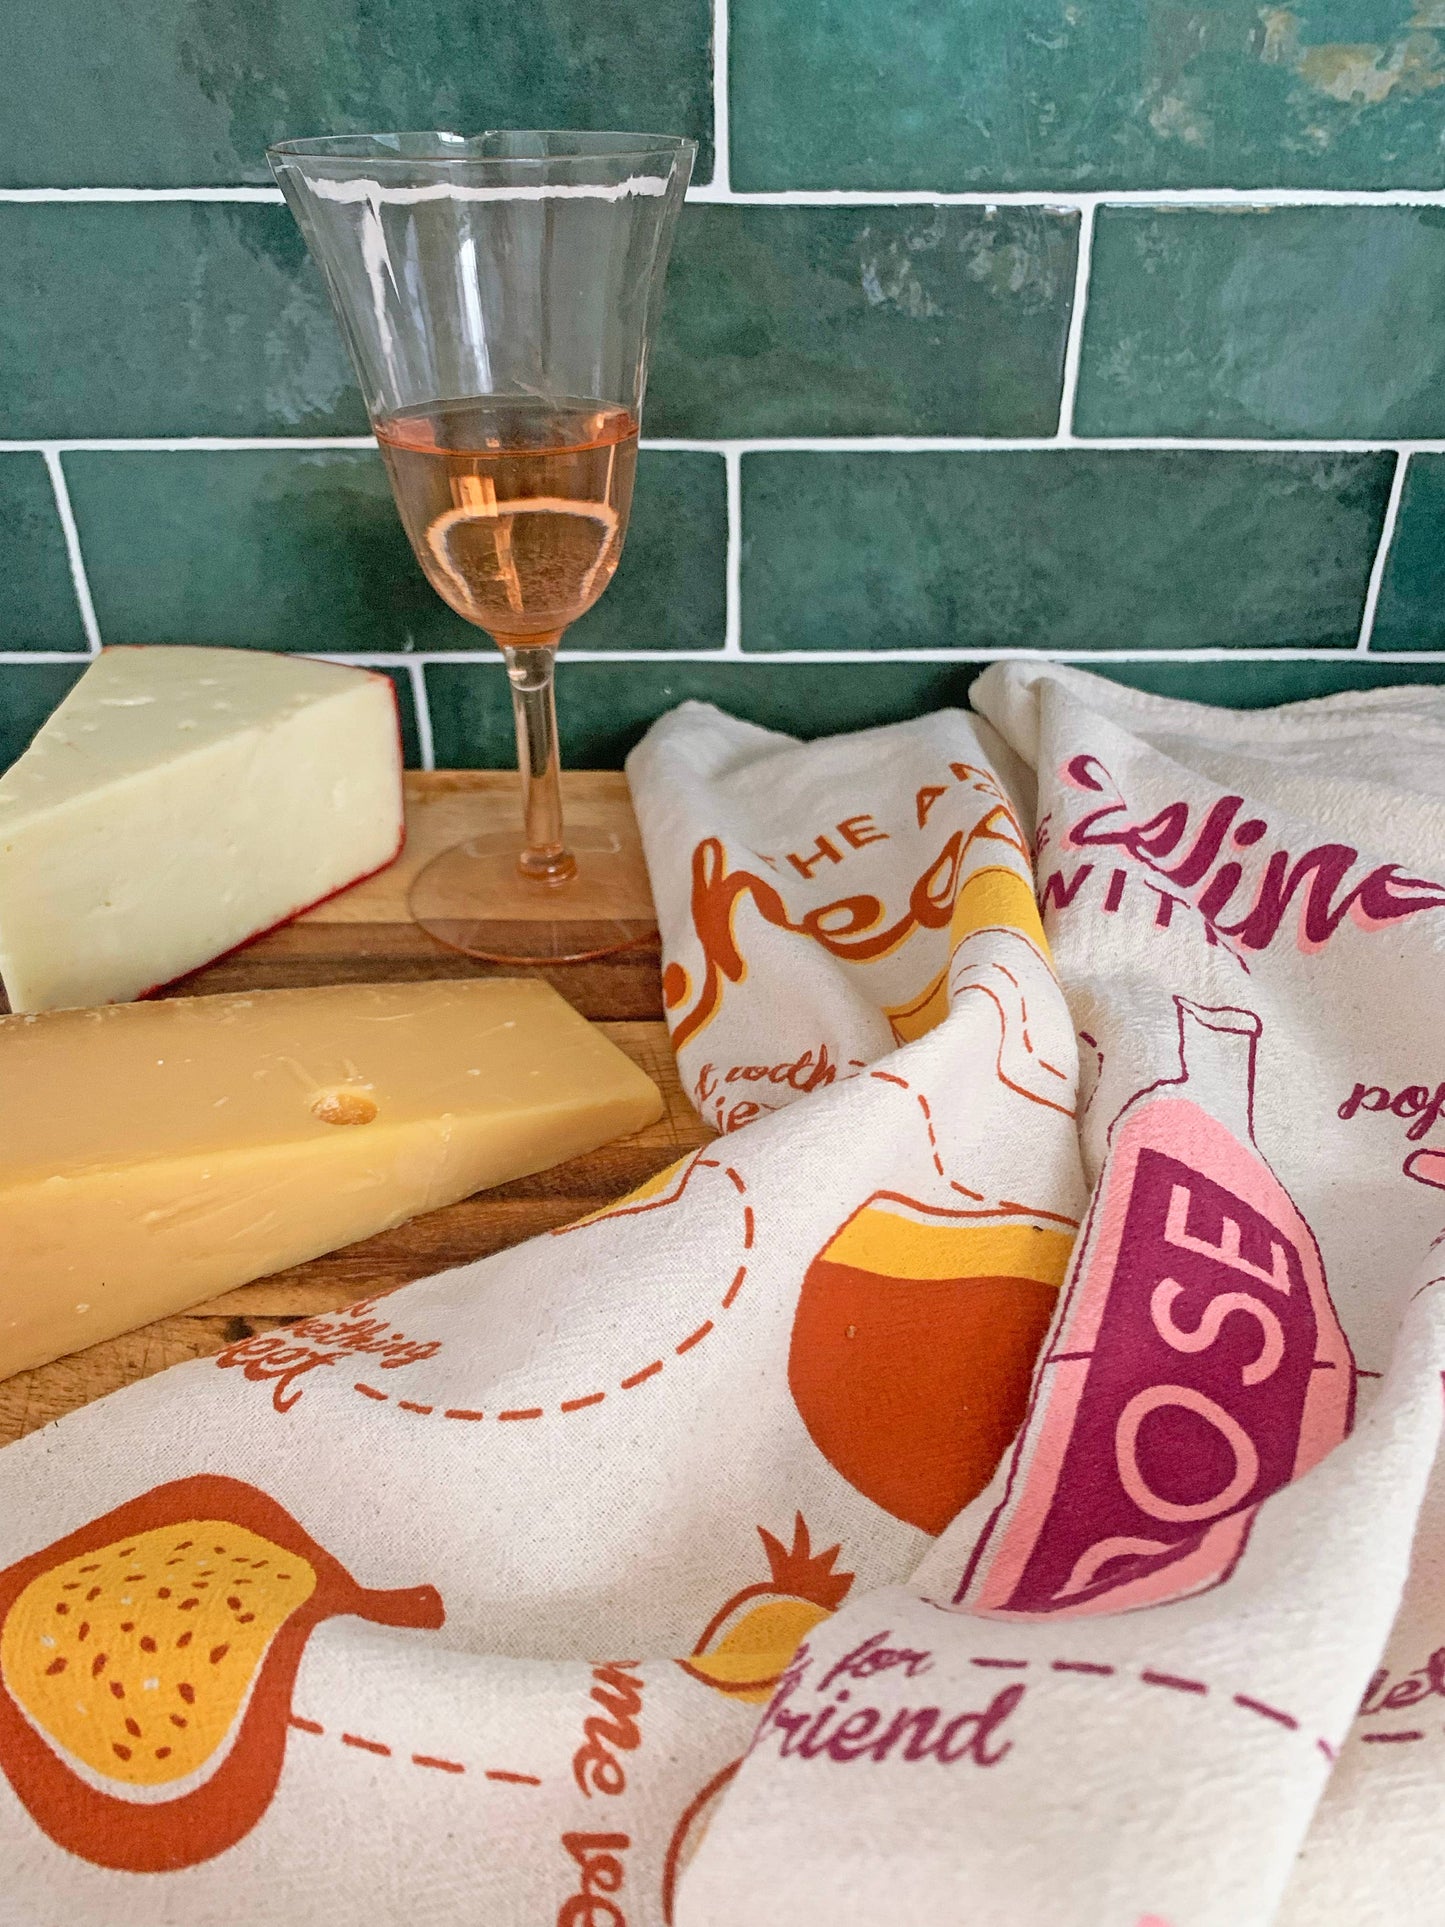 PERFECT PAIRING (Wine, Cheese) - Tea Towel Set of 2